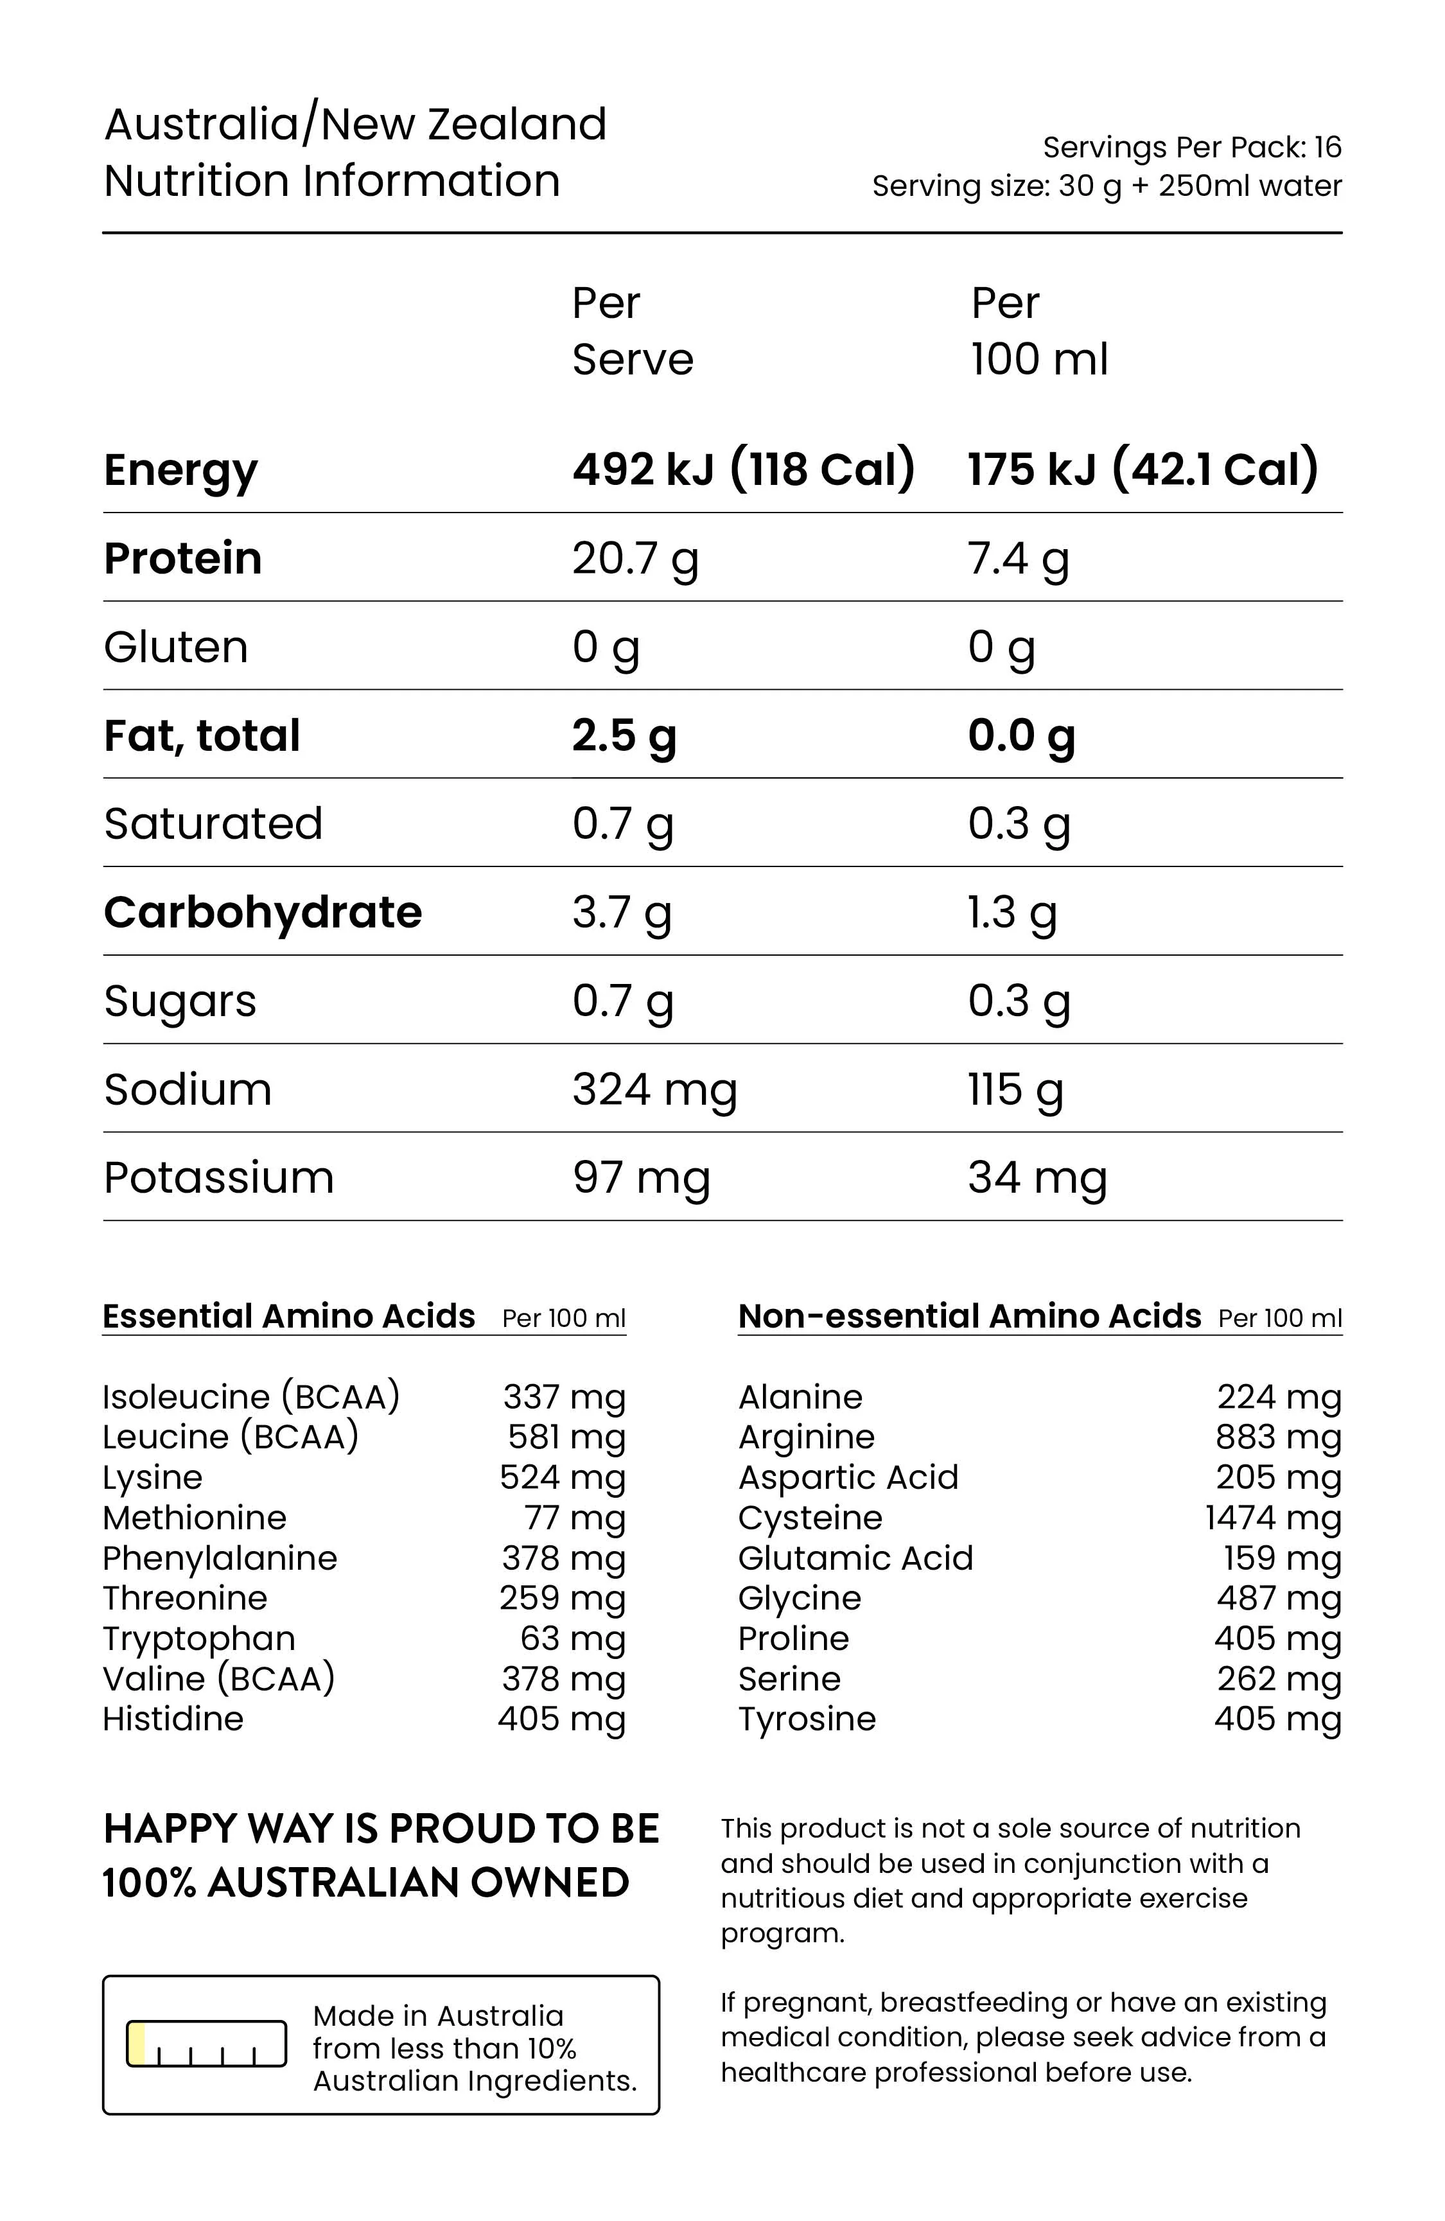 Happy Way Ashy Bines Vegan Protein Powder 500g, Choc Caramel